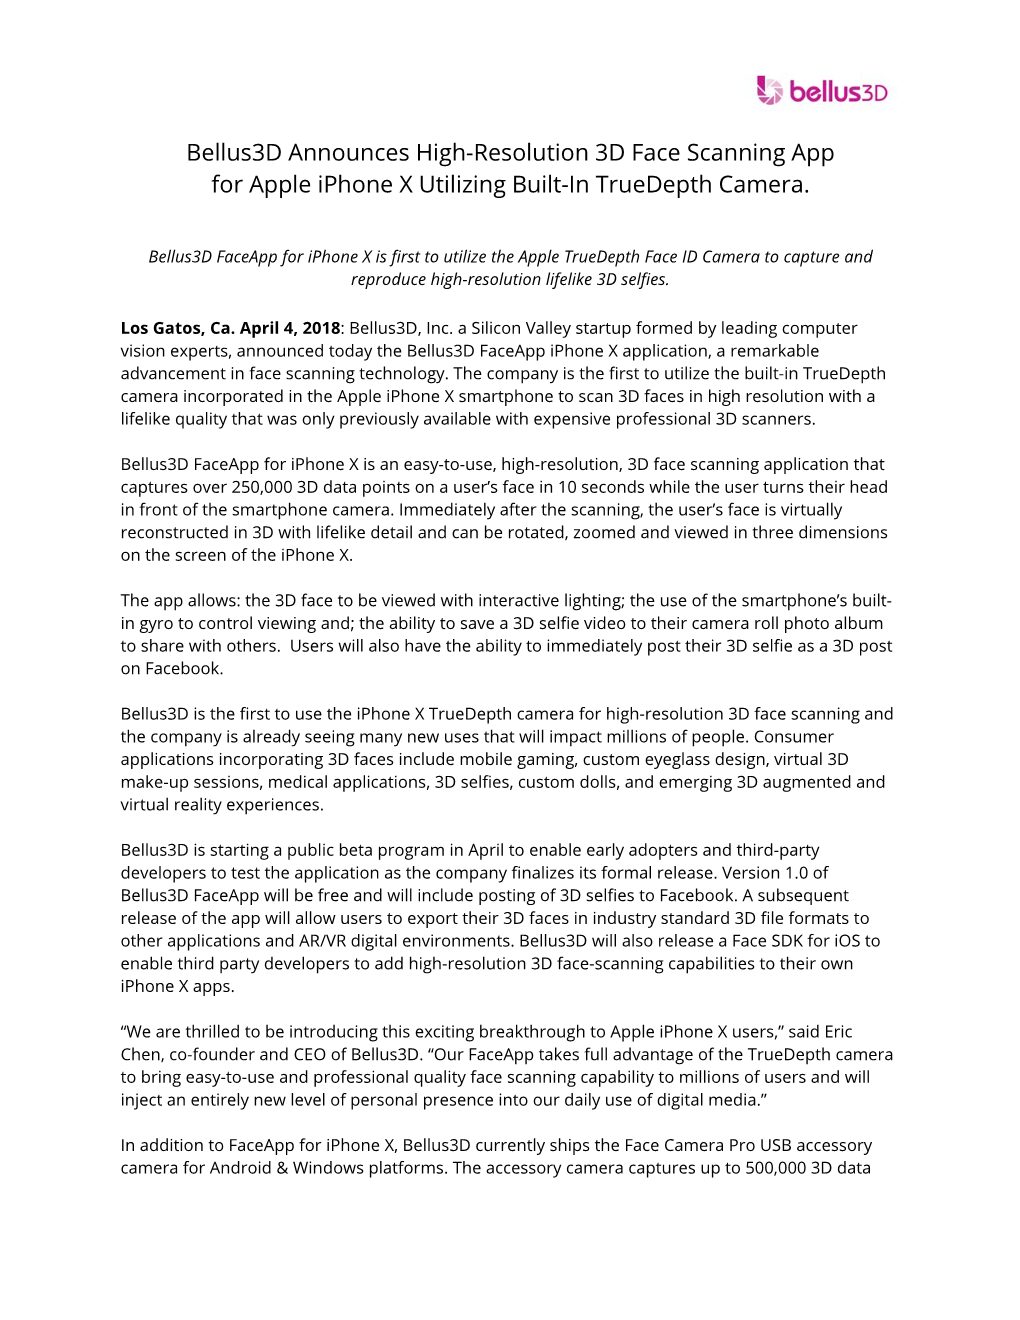 Bellus3d Announces High-Resolution 3D Face Scanning App for Apple Iphone X Utilizing Built-In Truedepth Camera